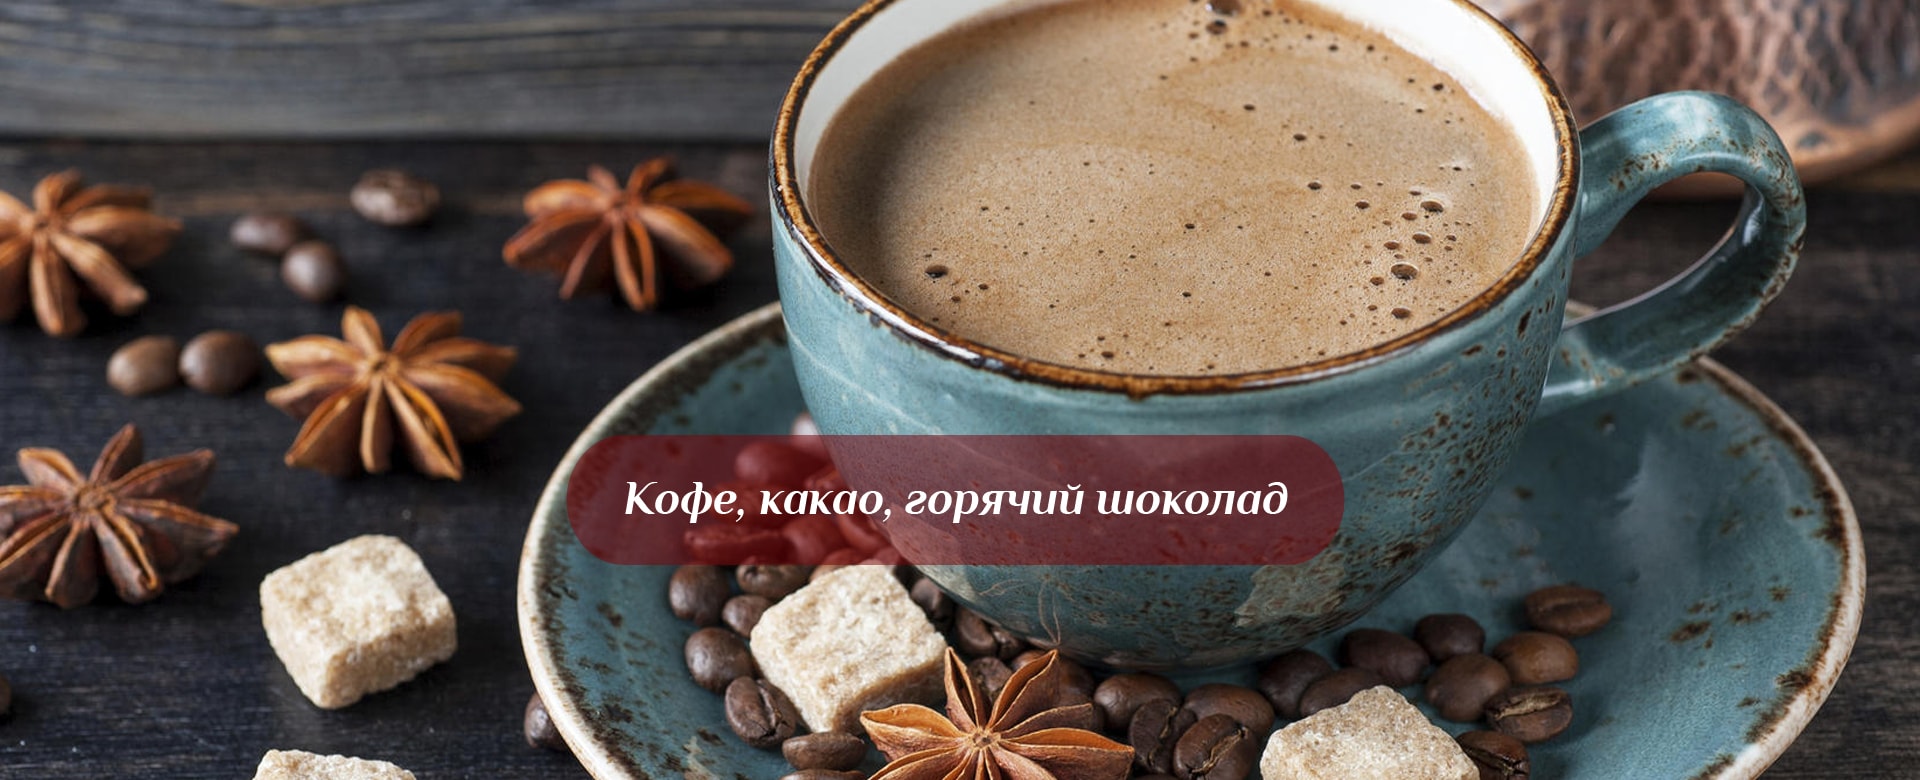 Кофе, какао, горячий шоколад